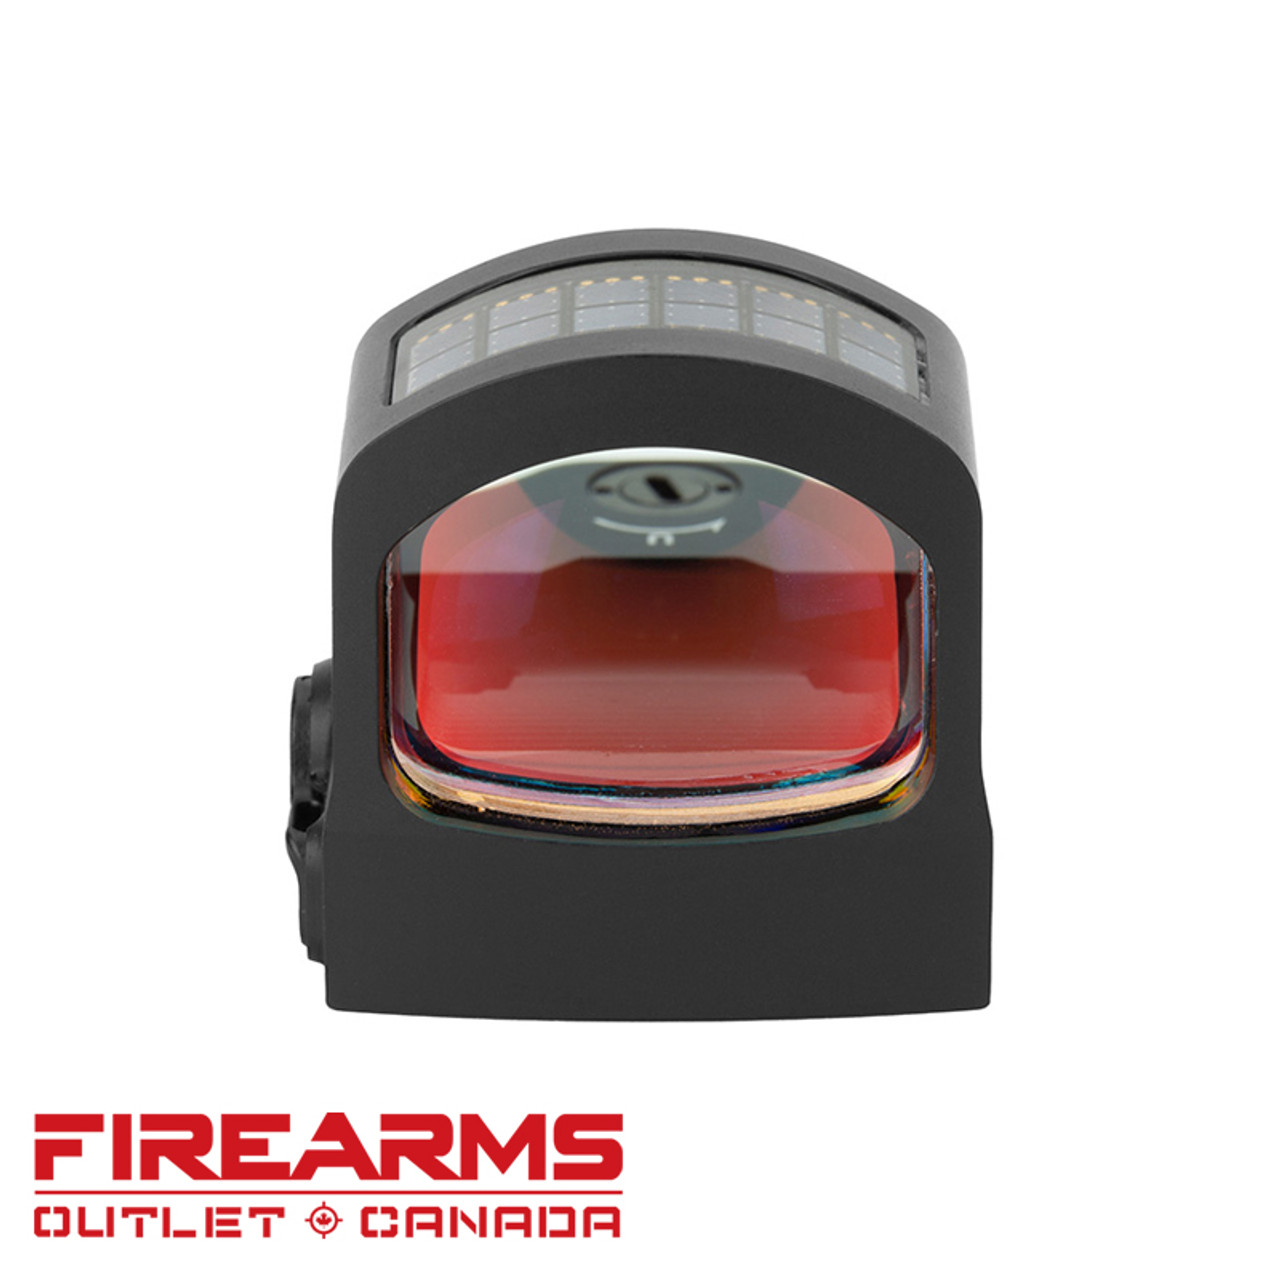 Holosun HS507C X2 Pistol Red Dot Sight - Red 2 MOA Dot w/ 32 MOA Circle [HS507C-X2]